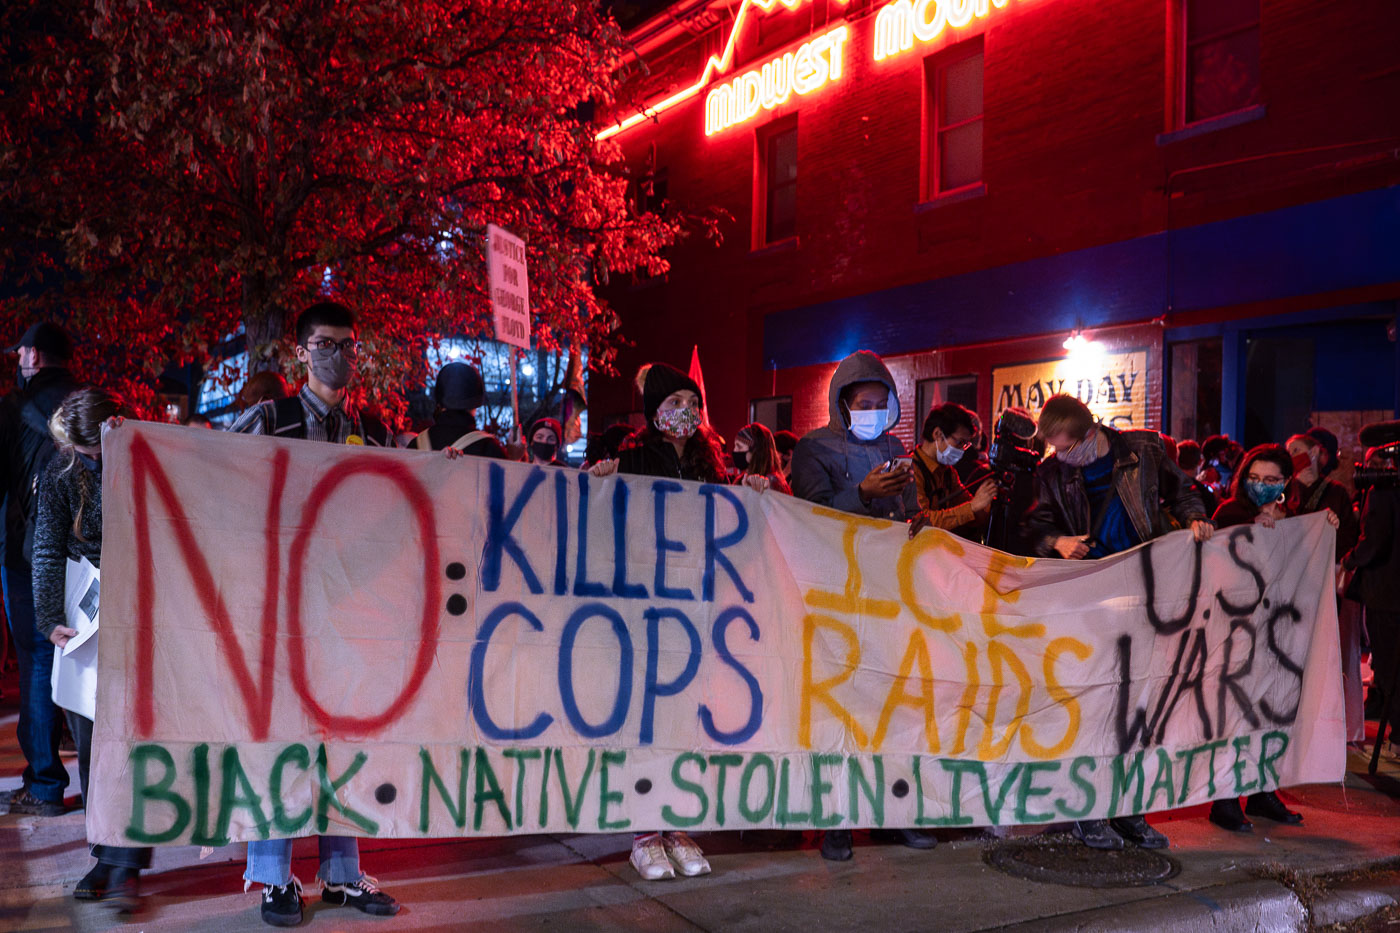 No Killer cops ice raids or us wars banner